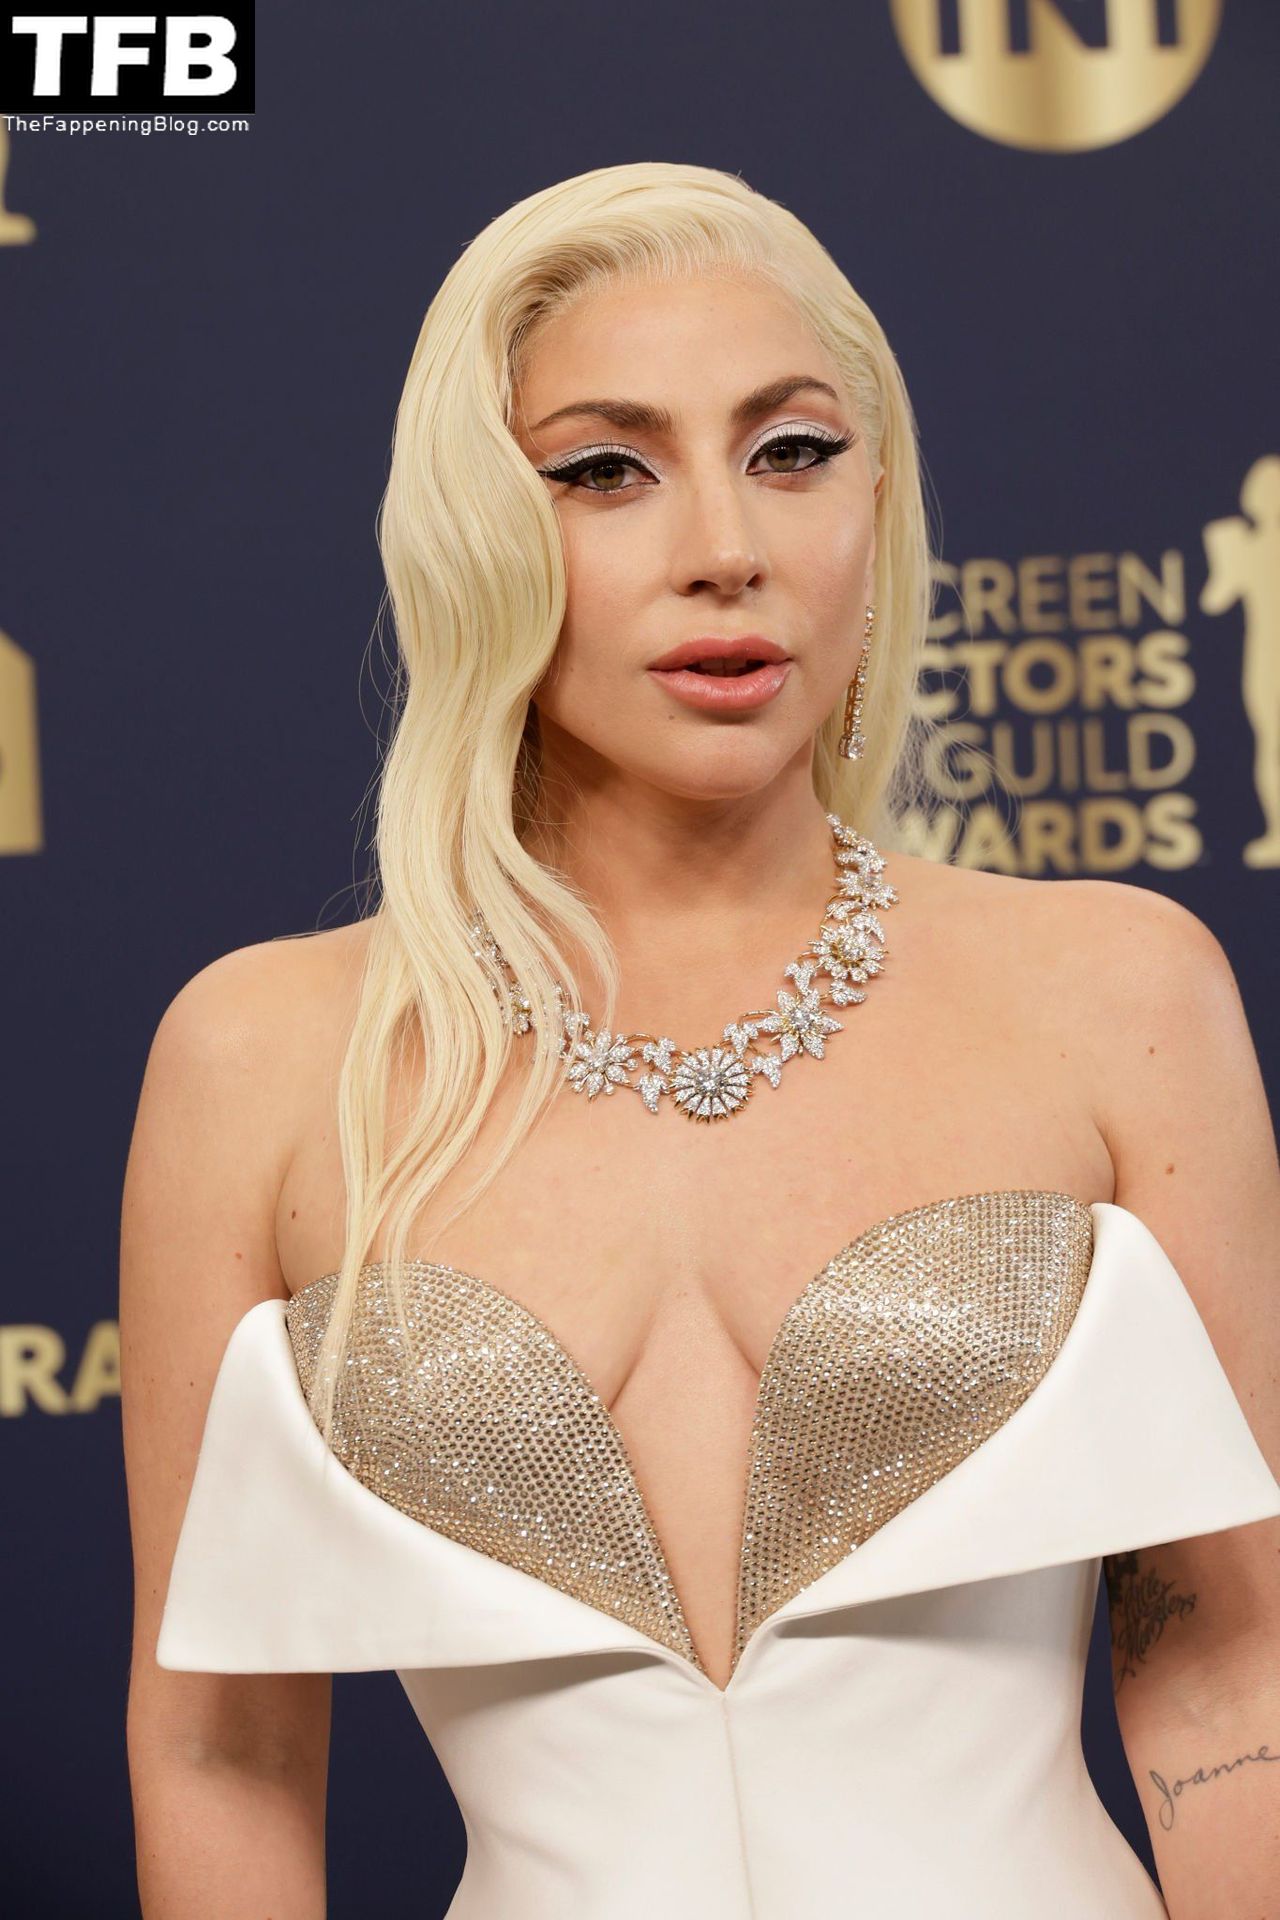 Lady-Gaga-Sexy-The-Fappening-Blog-52.jpg